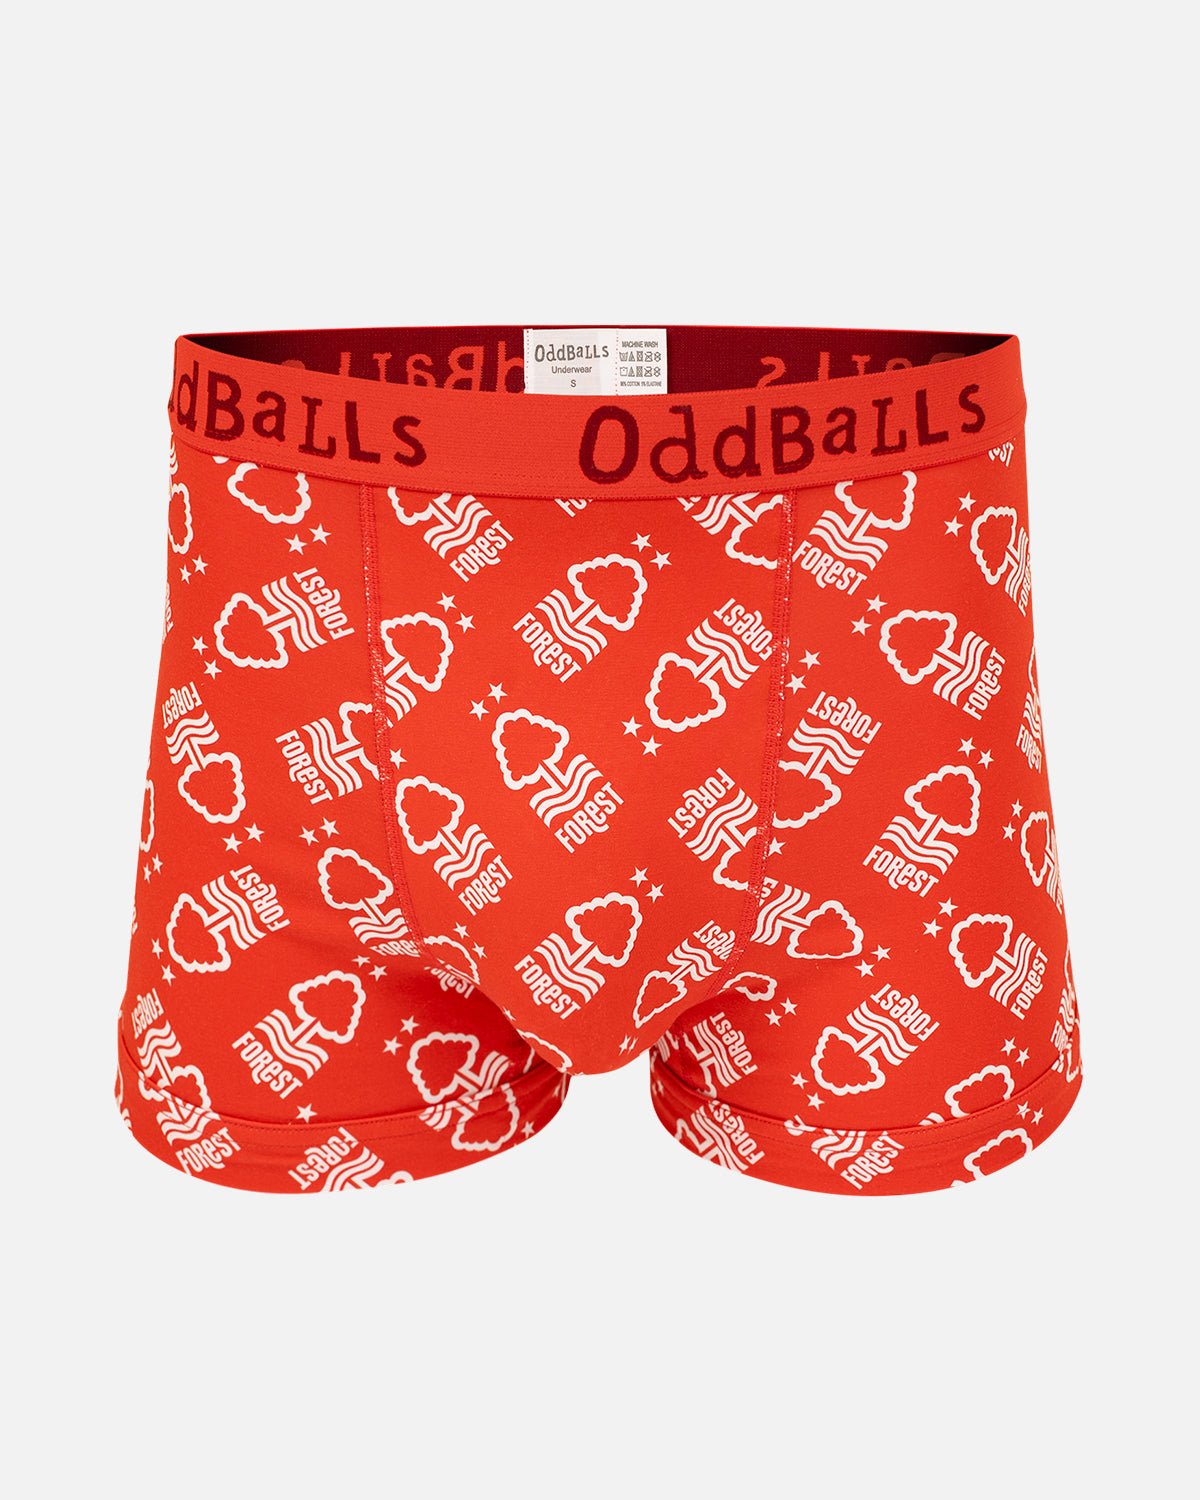 NFFC Oddballs Boxer Shorts - Nottingham Forest FC